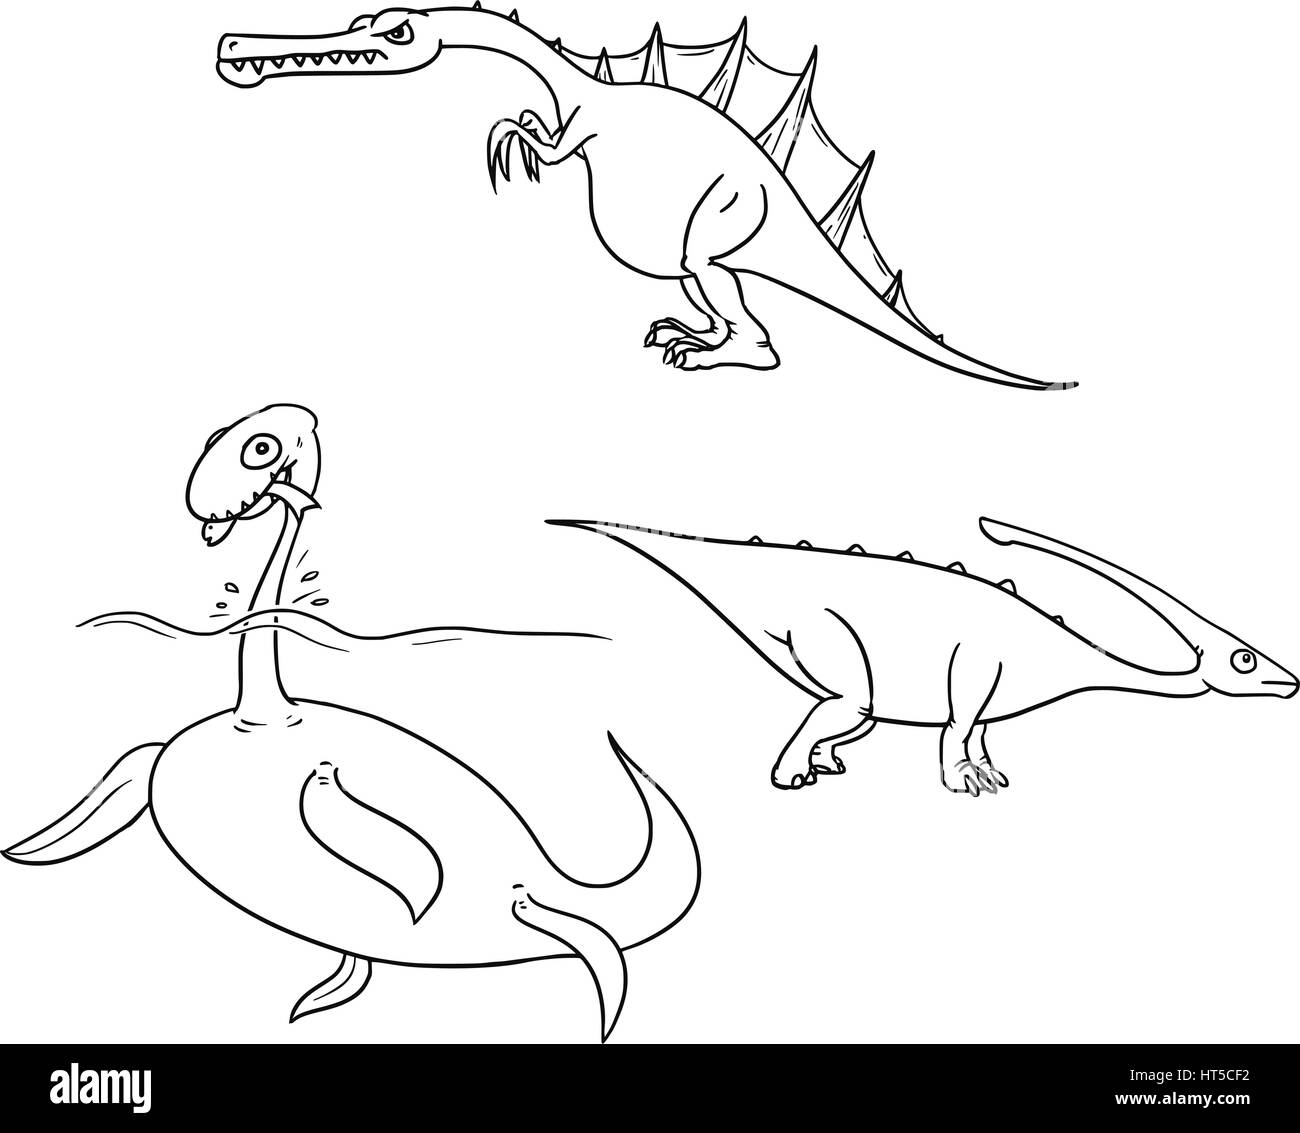 Vector Cartoon Set 02 of ancient dinosaur monster - plesiosaurs,Charonosaurus/Parasaurolophus,Spinosaurus Stock Vector